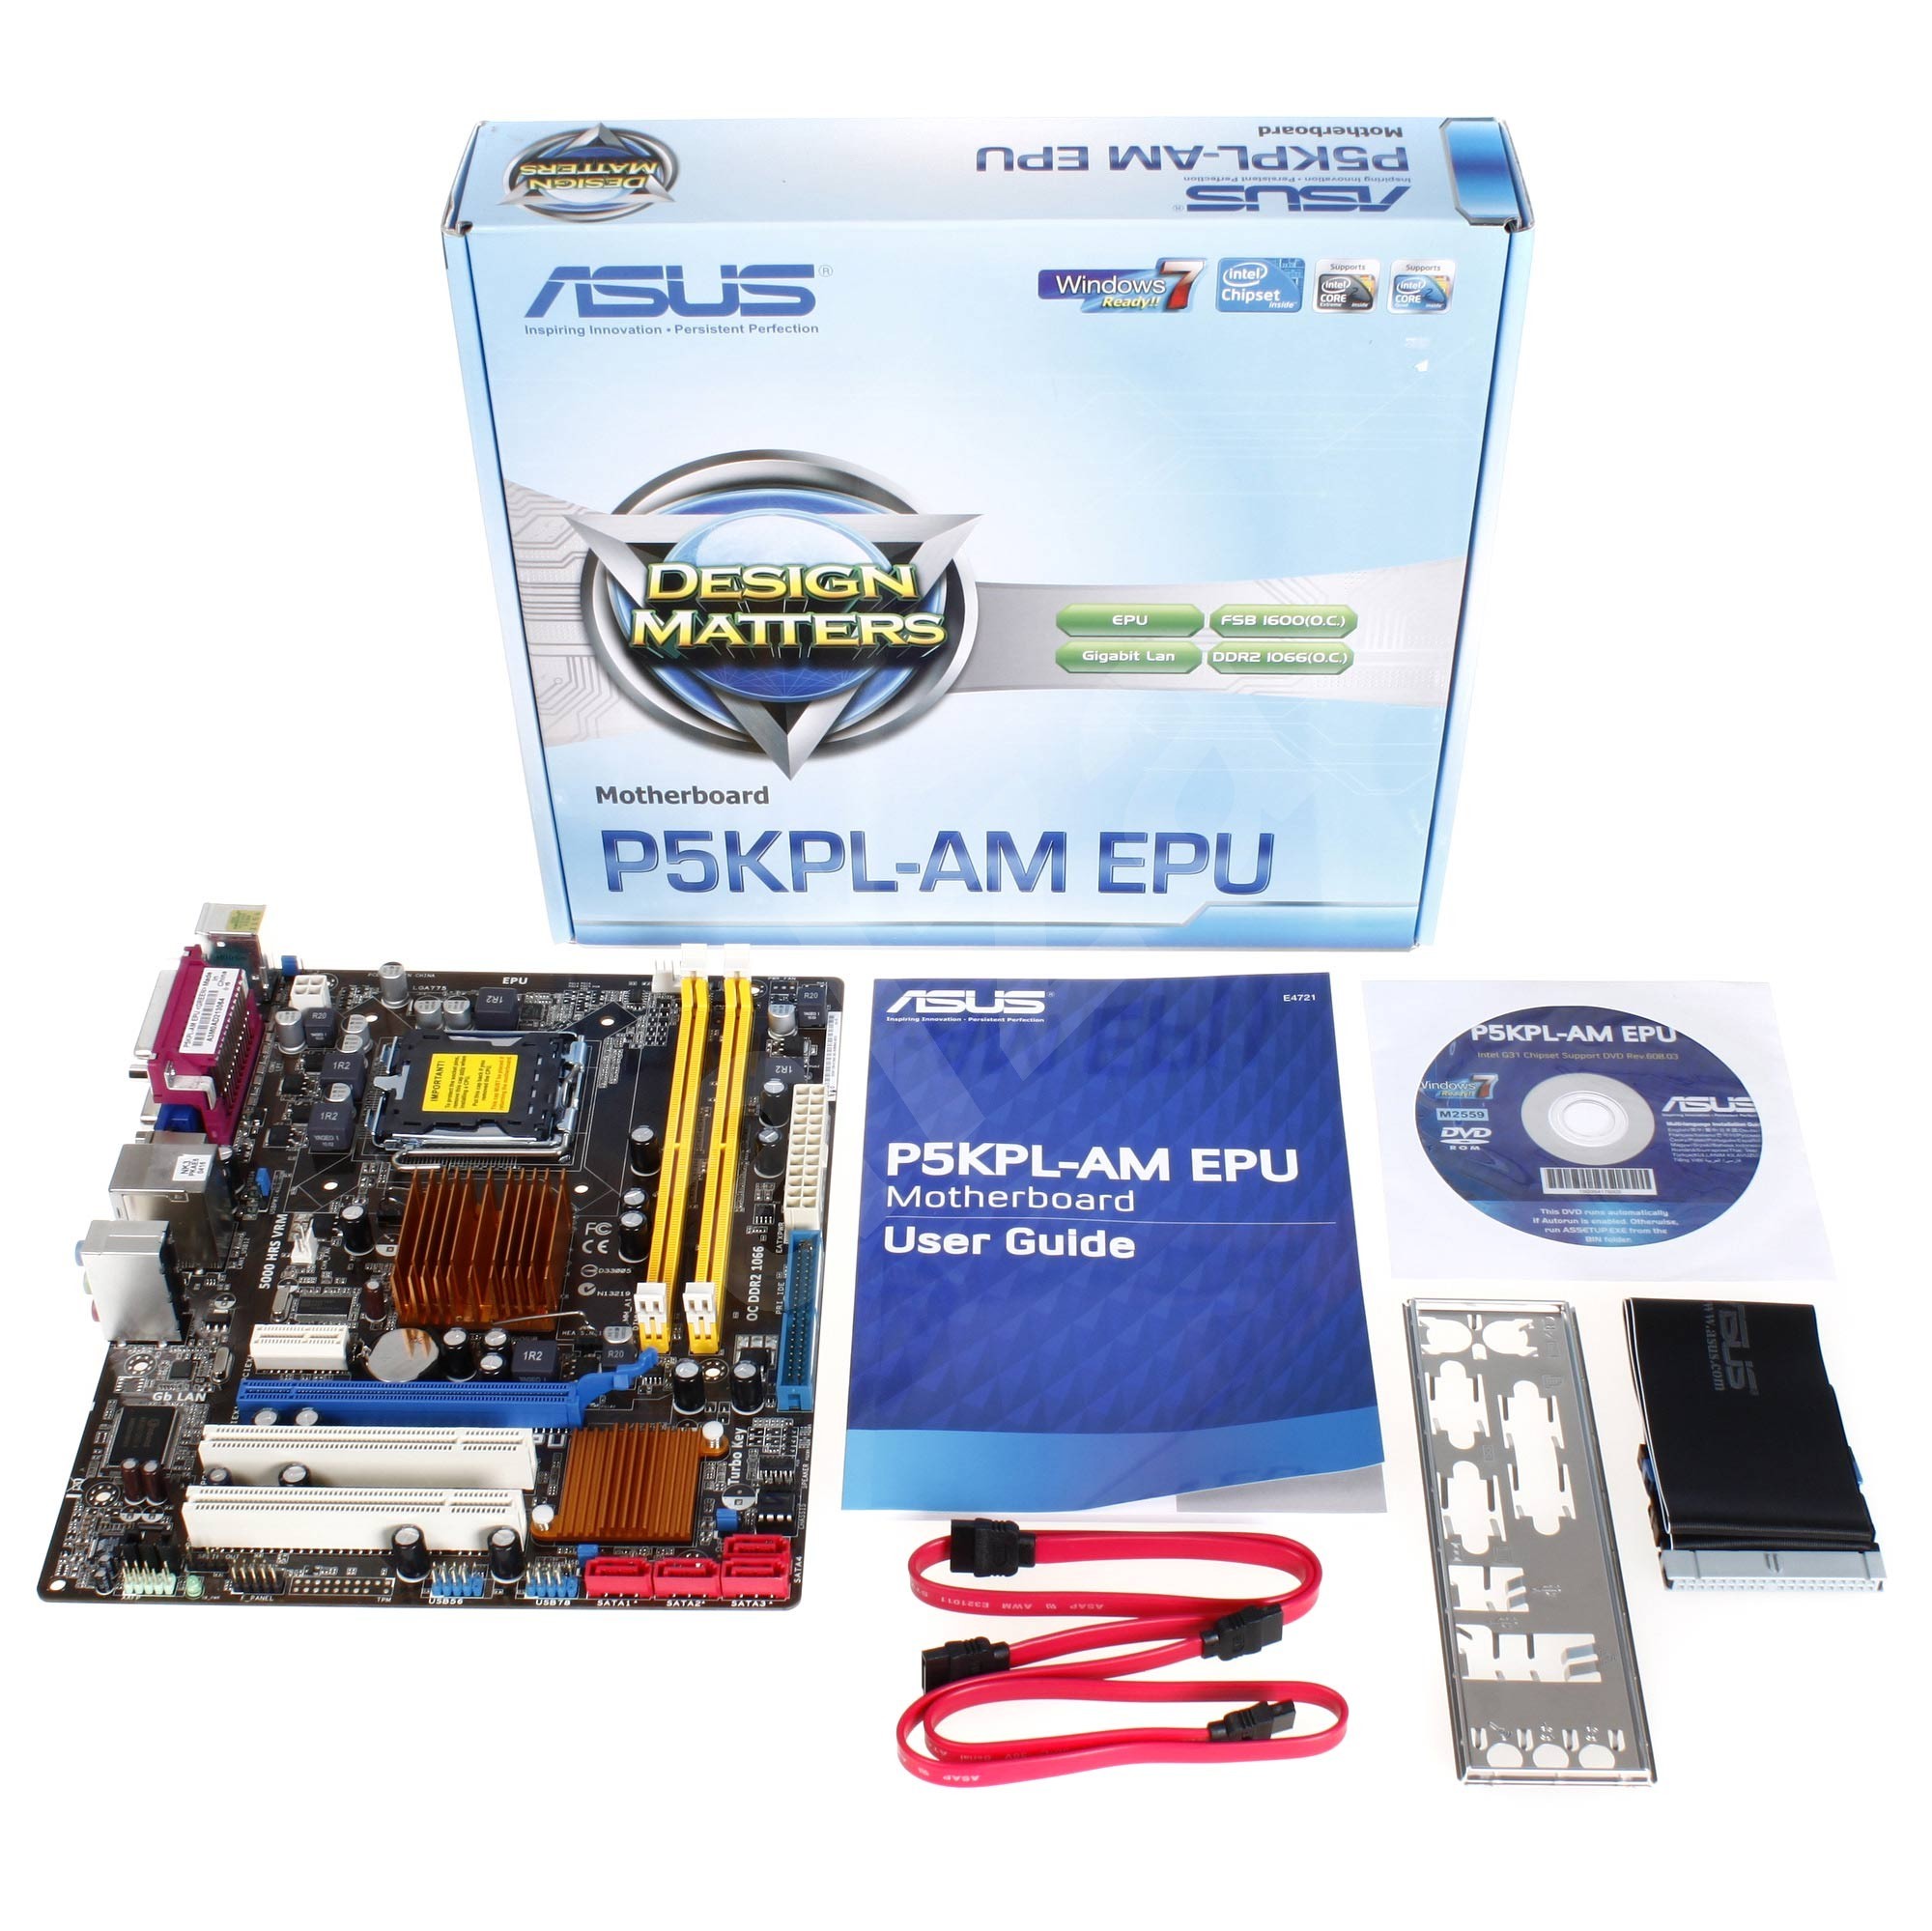 Asus Motherboard P5kpl-am Epu Driver Free Download